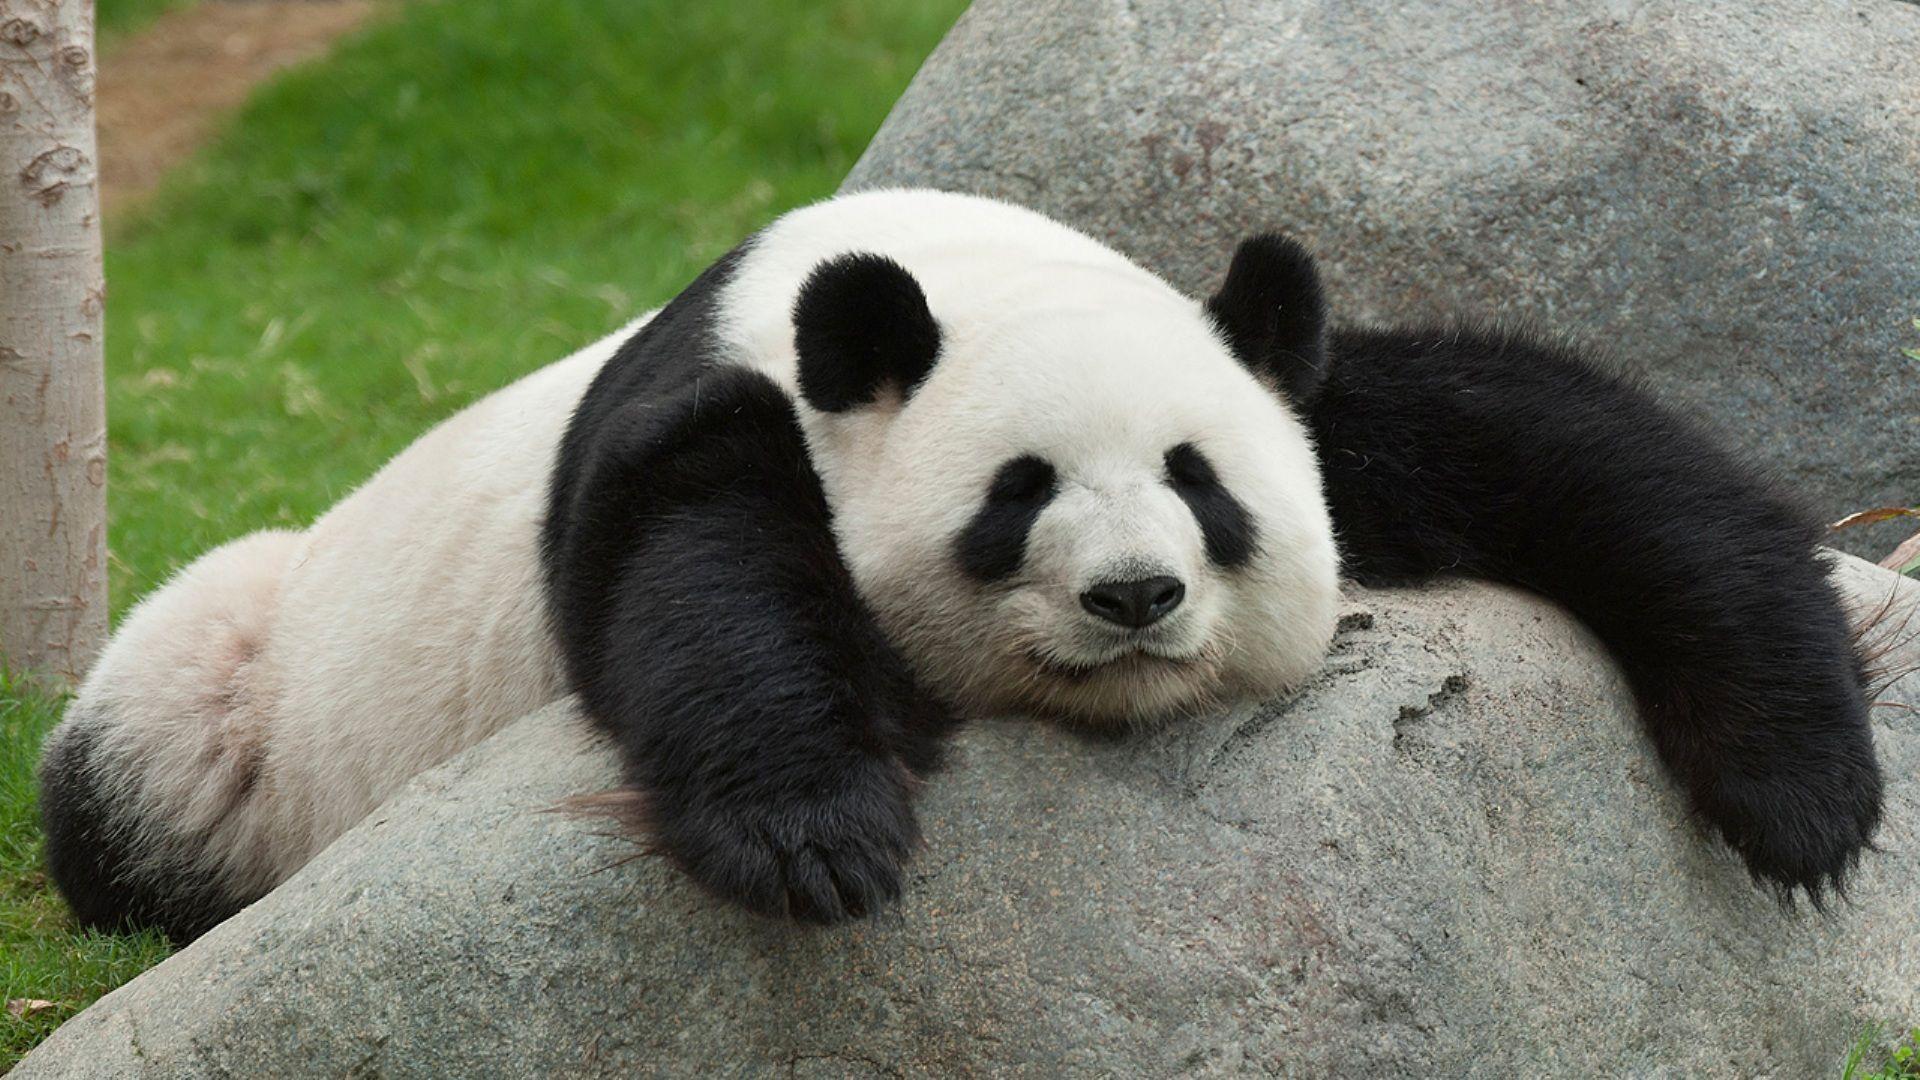 Sleeping Panda Wallpapers Top Free Sleeping Panda Backgrounds Wallpaperaccess